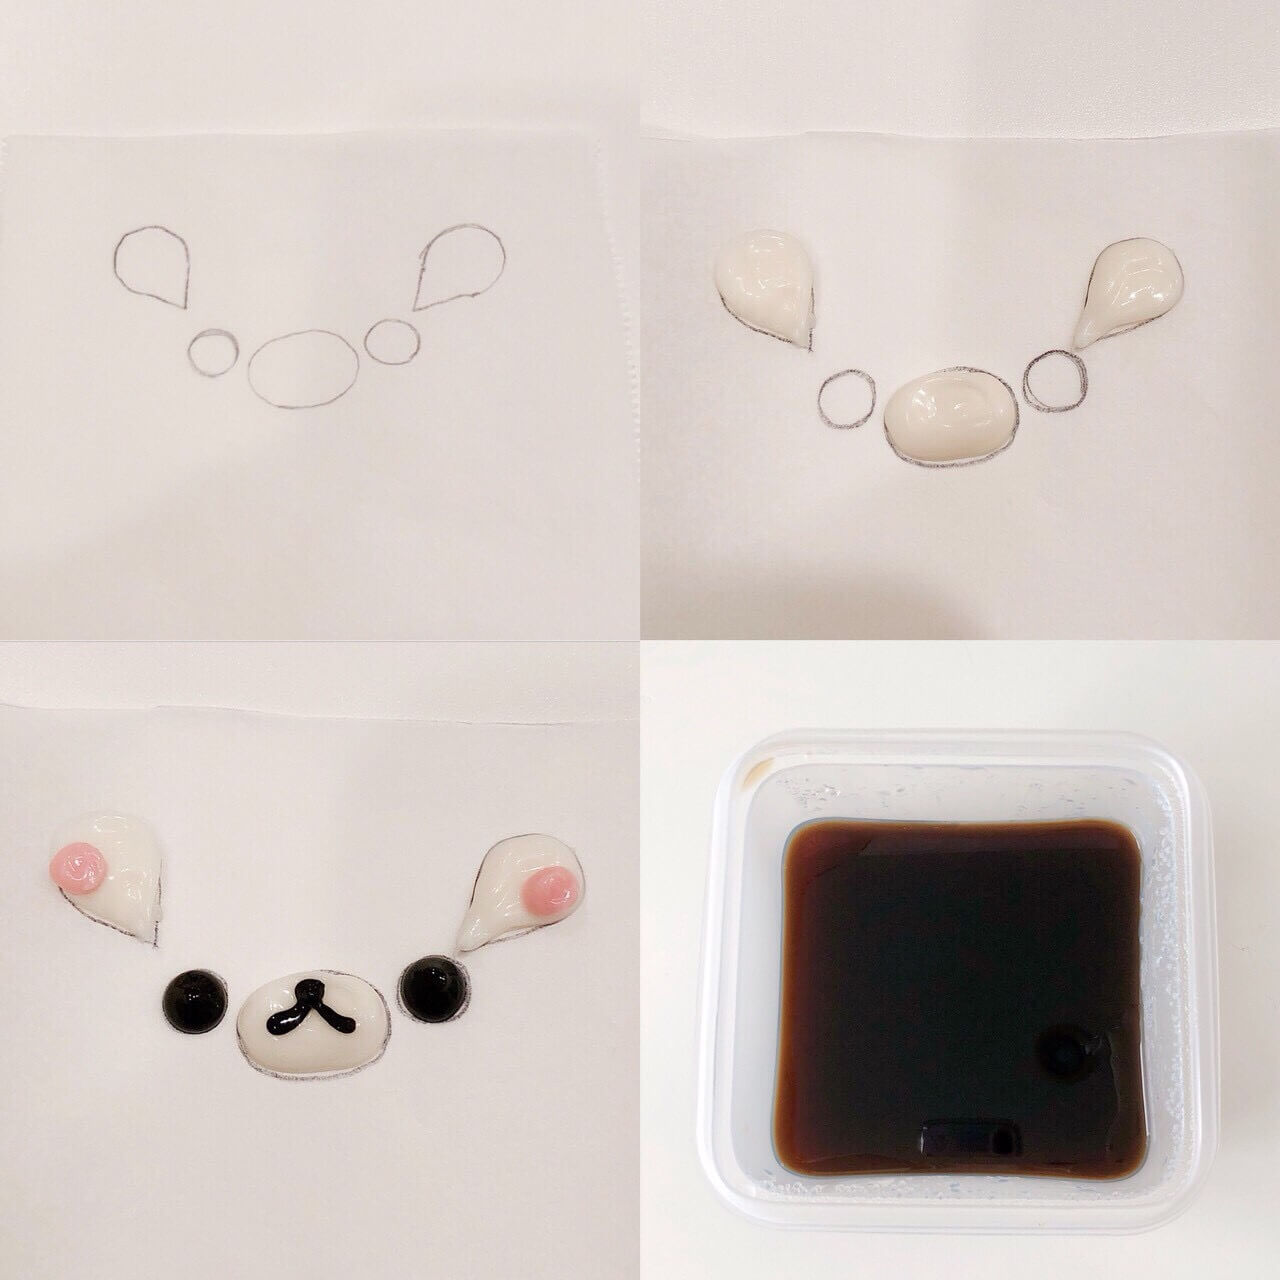 Kaori’s Easy Recipe: Learn to Make Korilakkuma Coffee Jelly Parfait